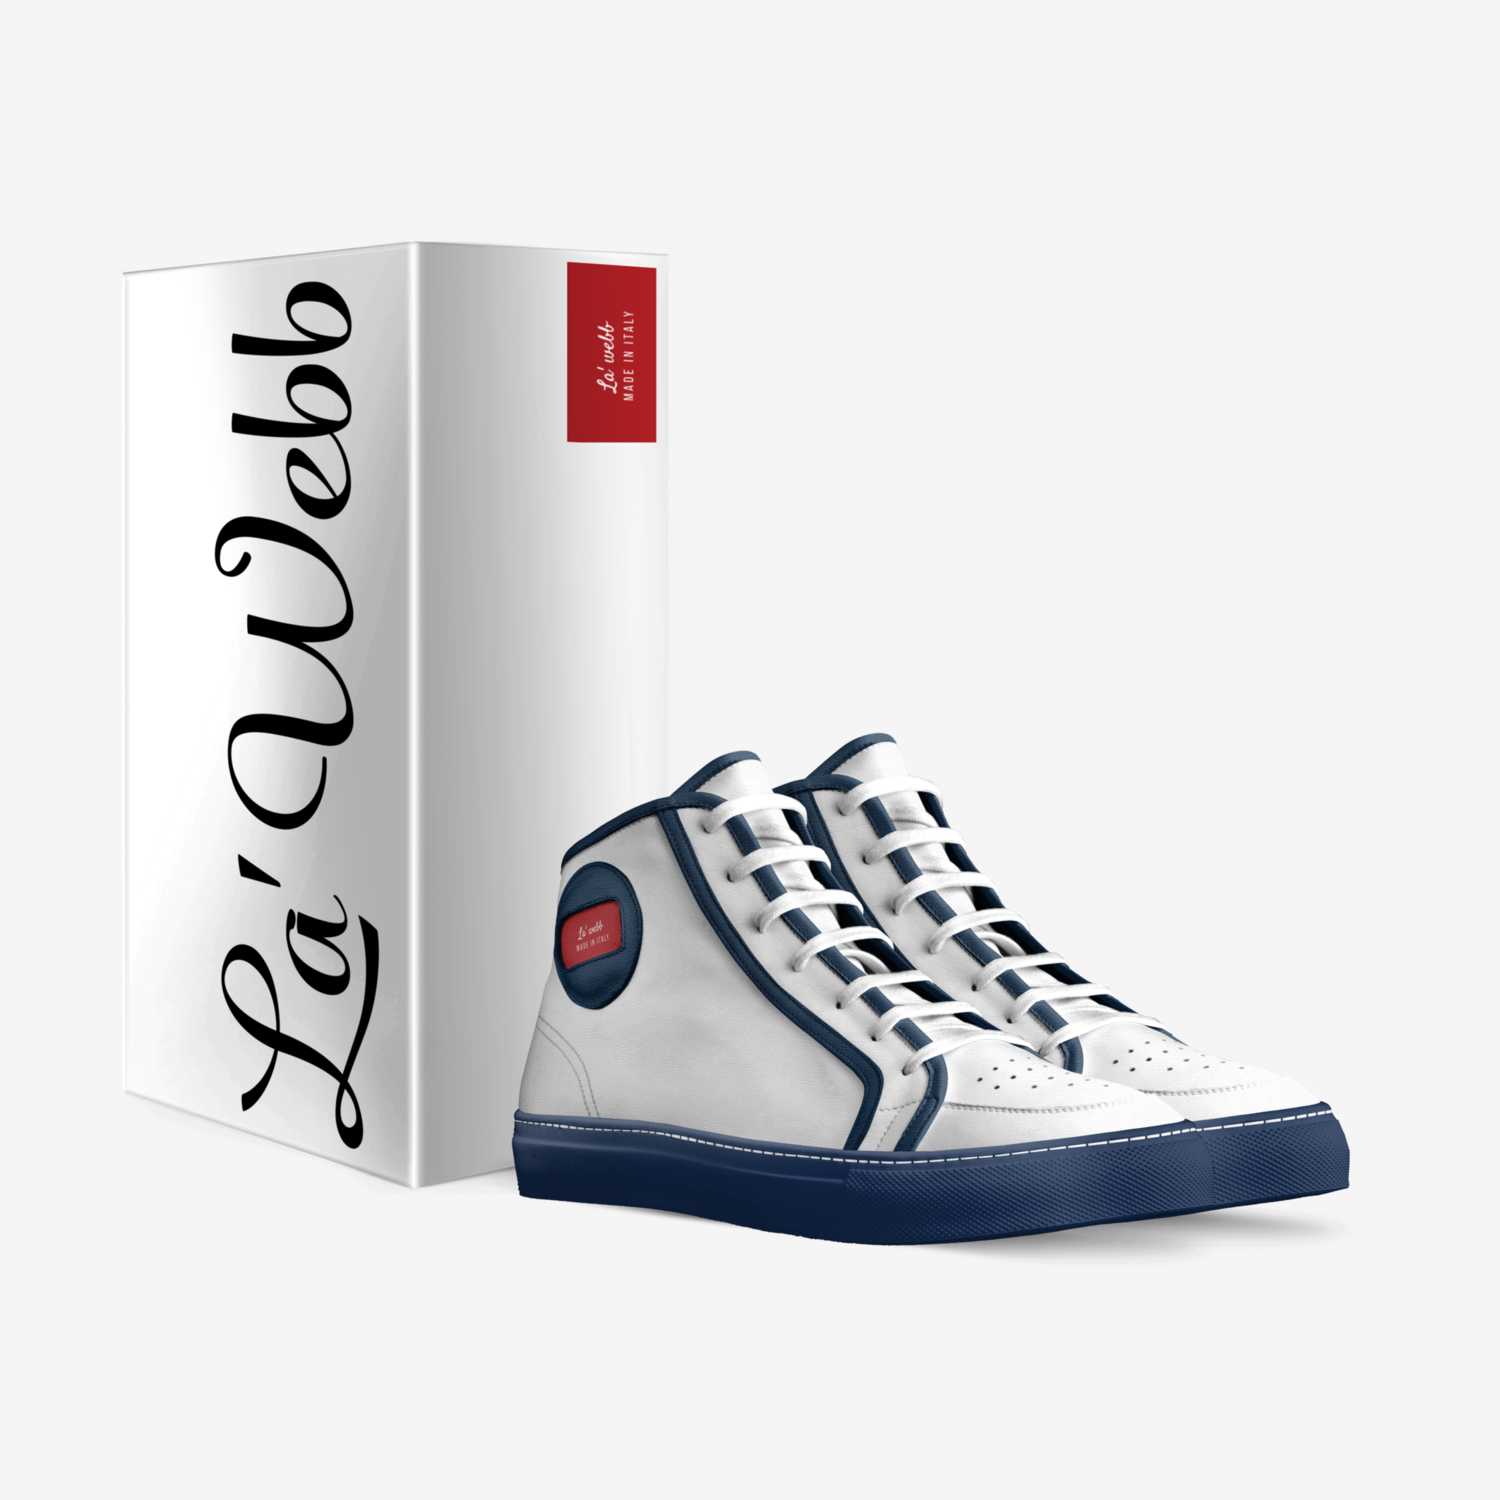 La' webb  custom made in Italy shoes by Wilbert Webb | Box view